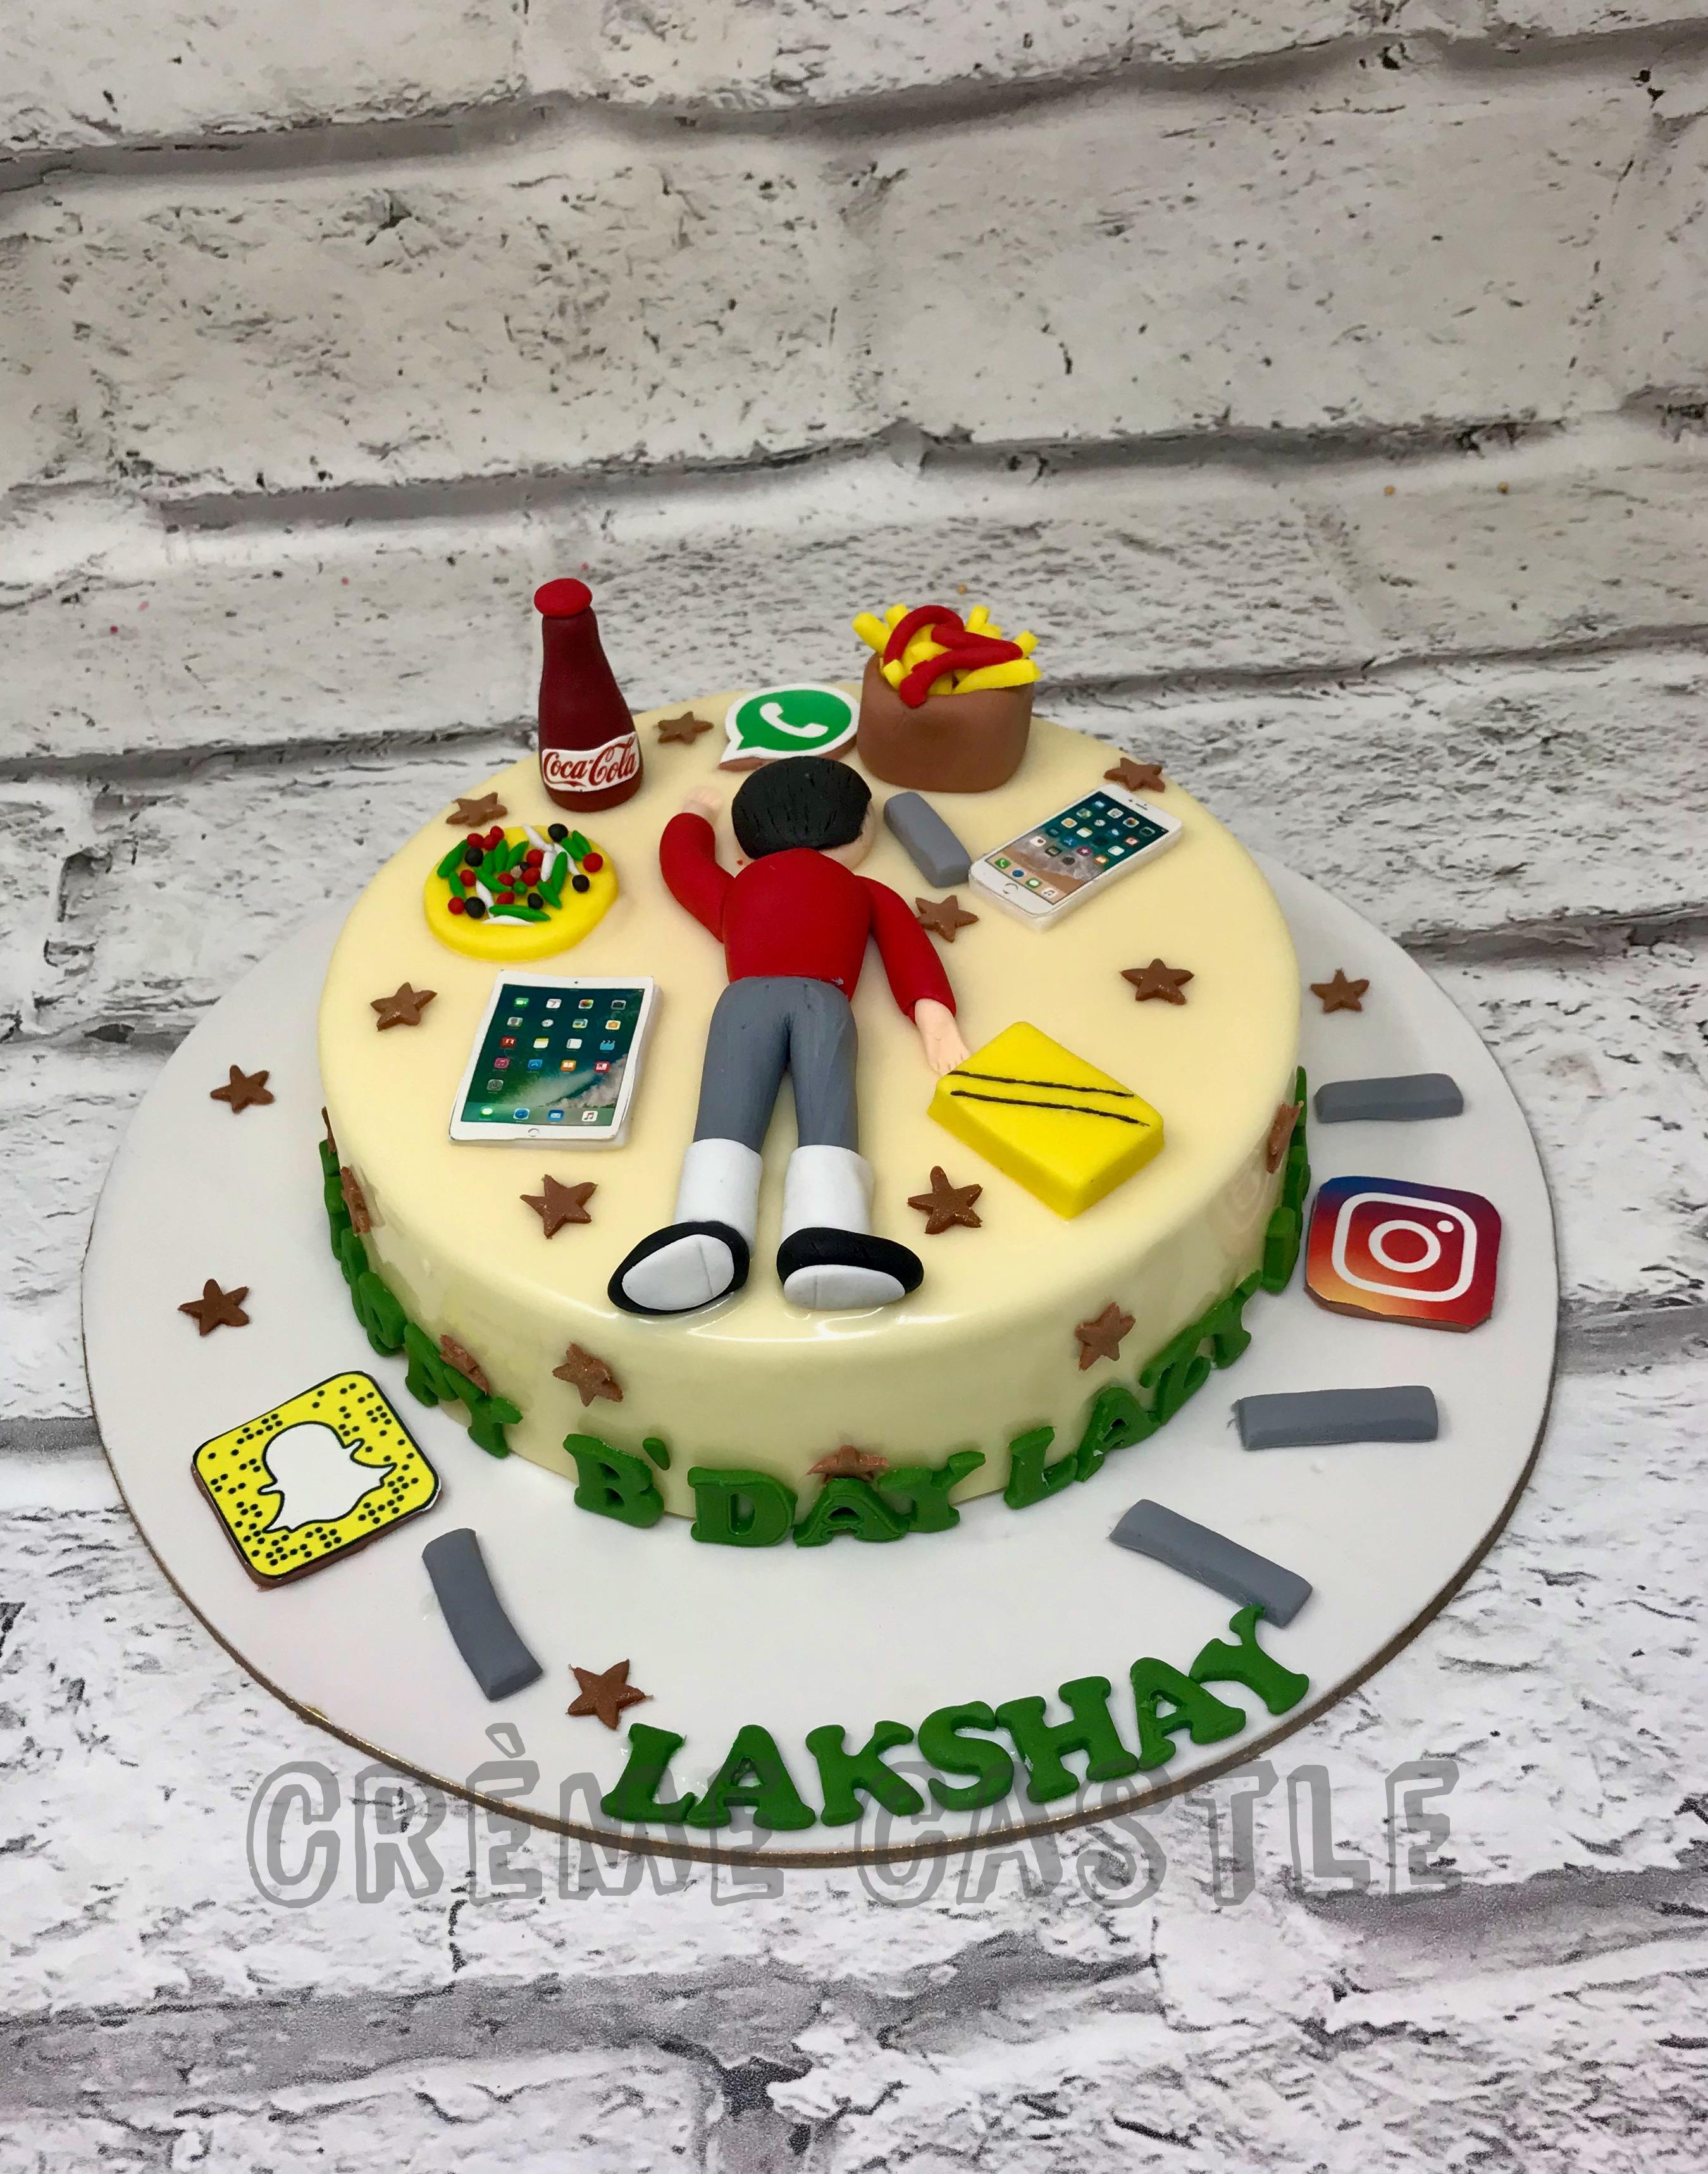 Workaholic Theme Cake ❣️... - the_cake_room_by_disha_badlani | Facebook